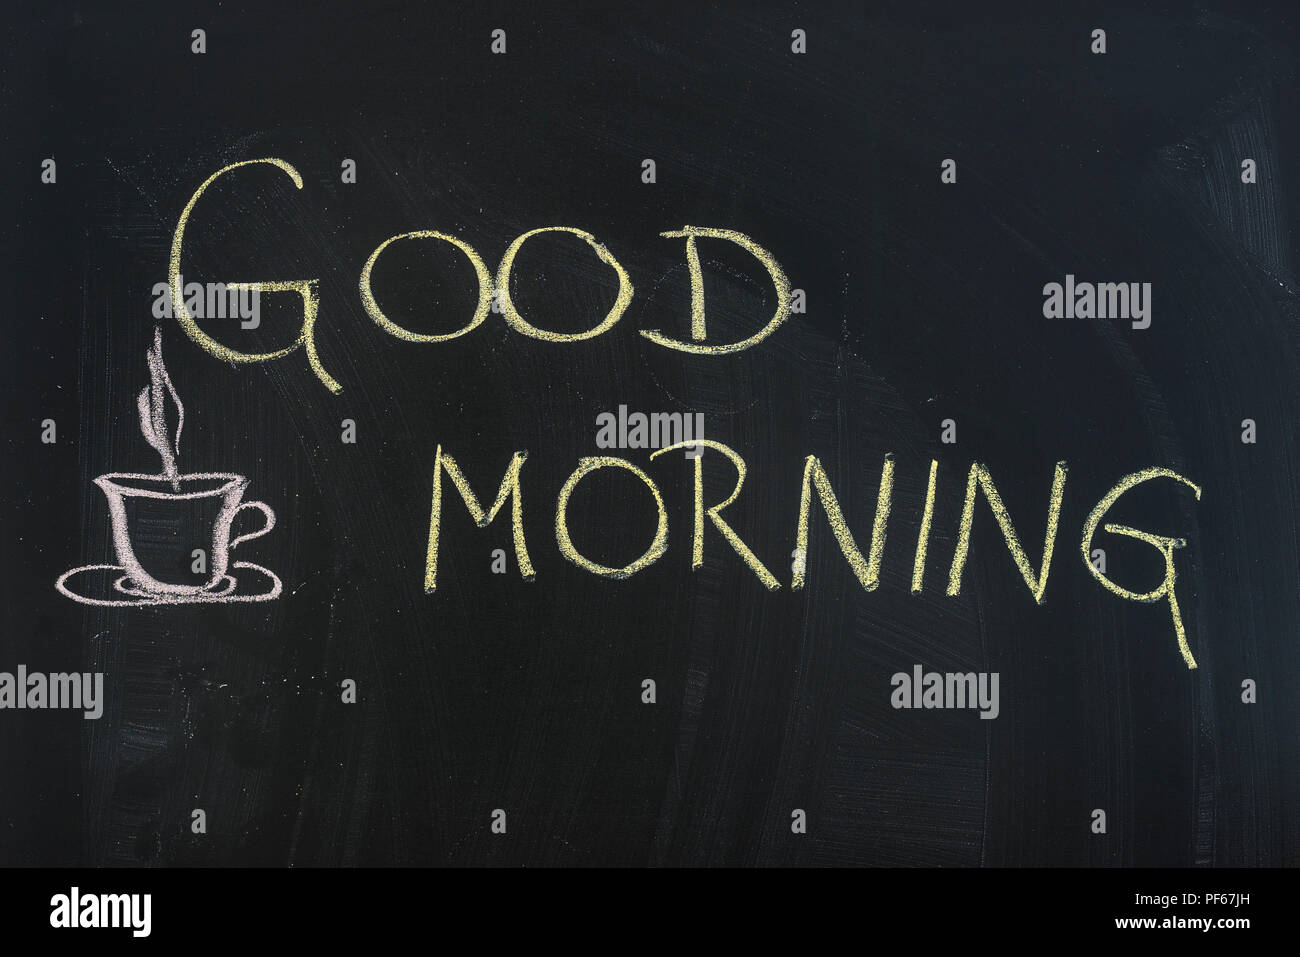 Good morning written on black board. Stock Photo